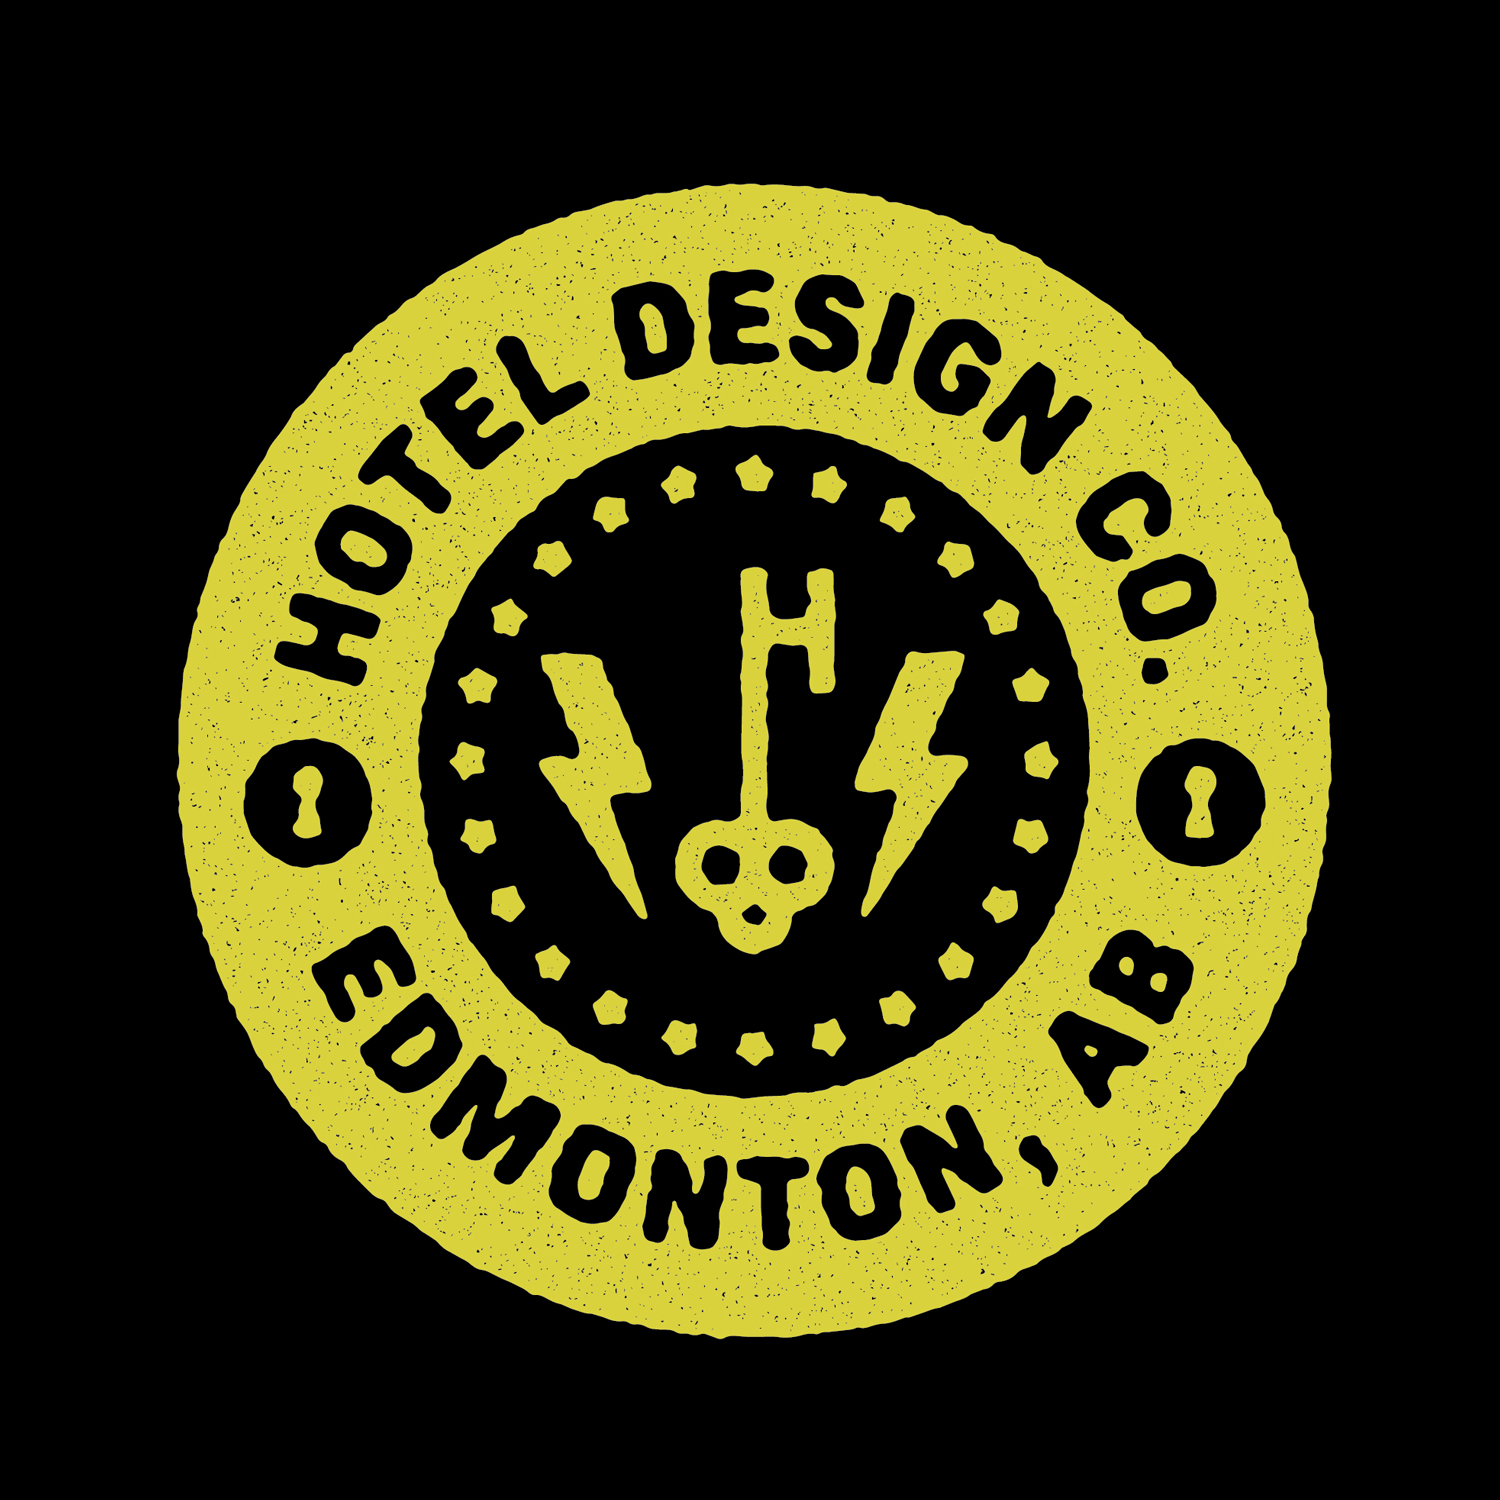 Hotel Graphic Design Company on LogoLounge